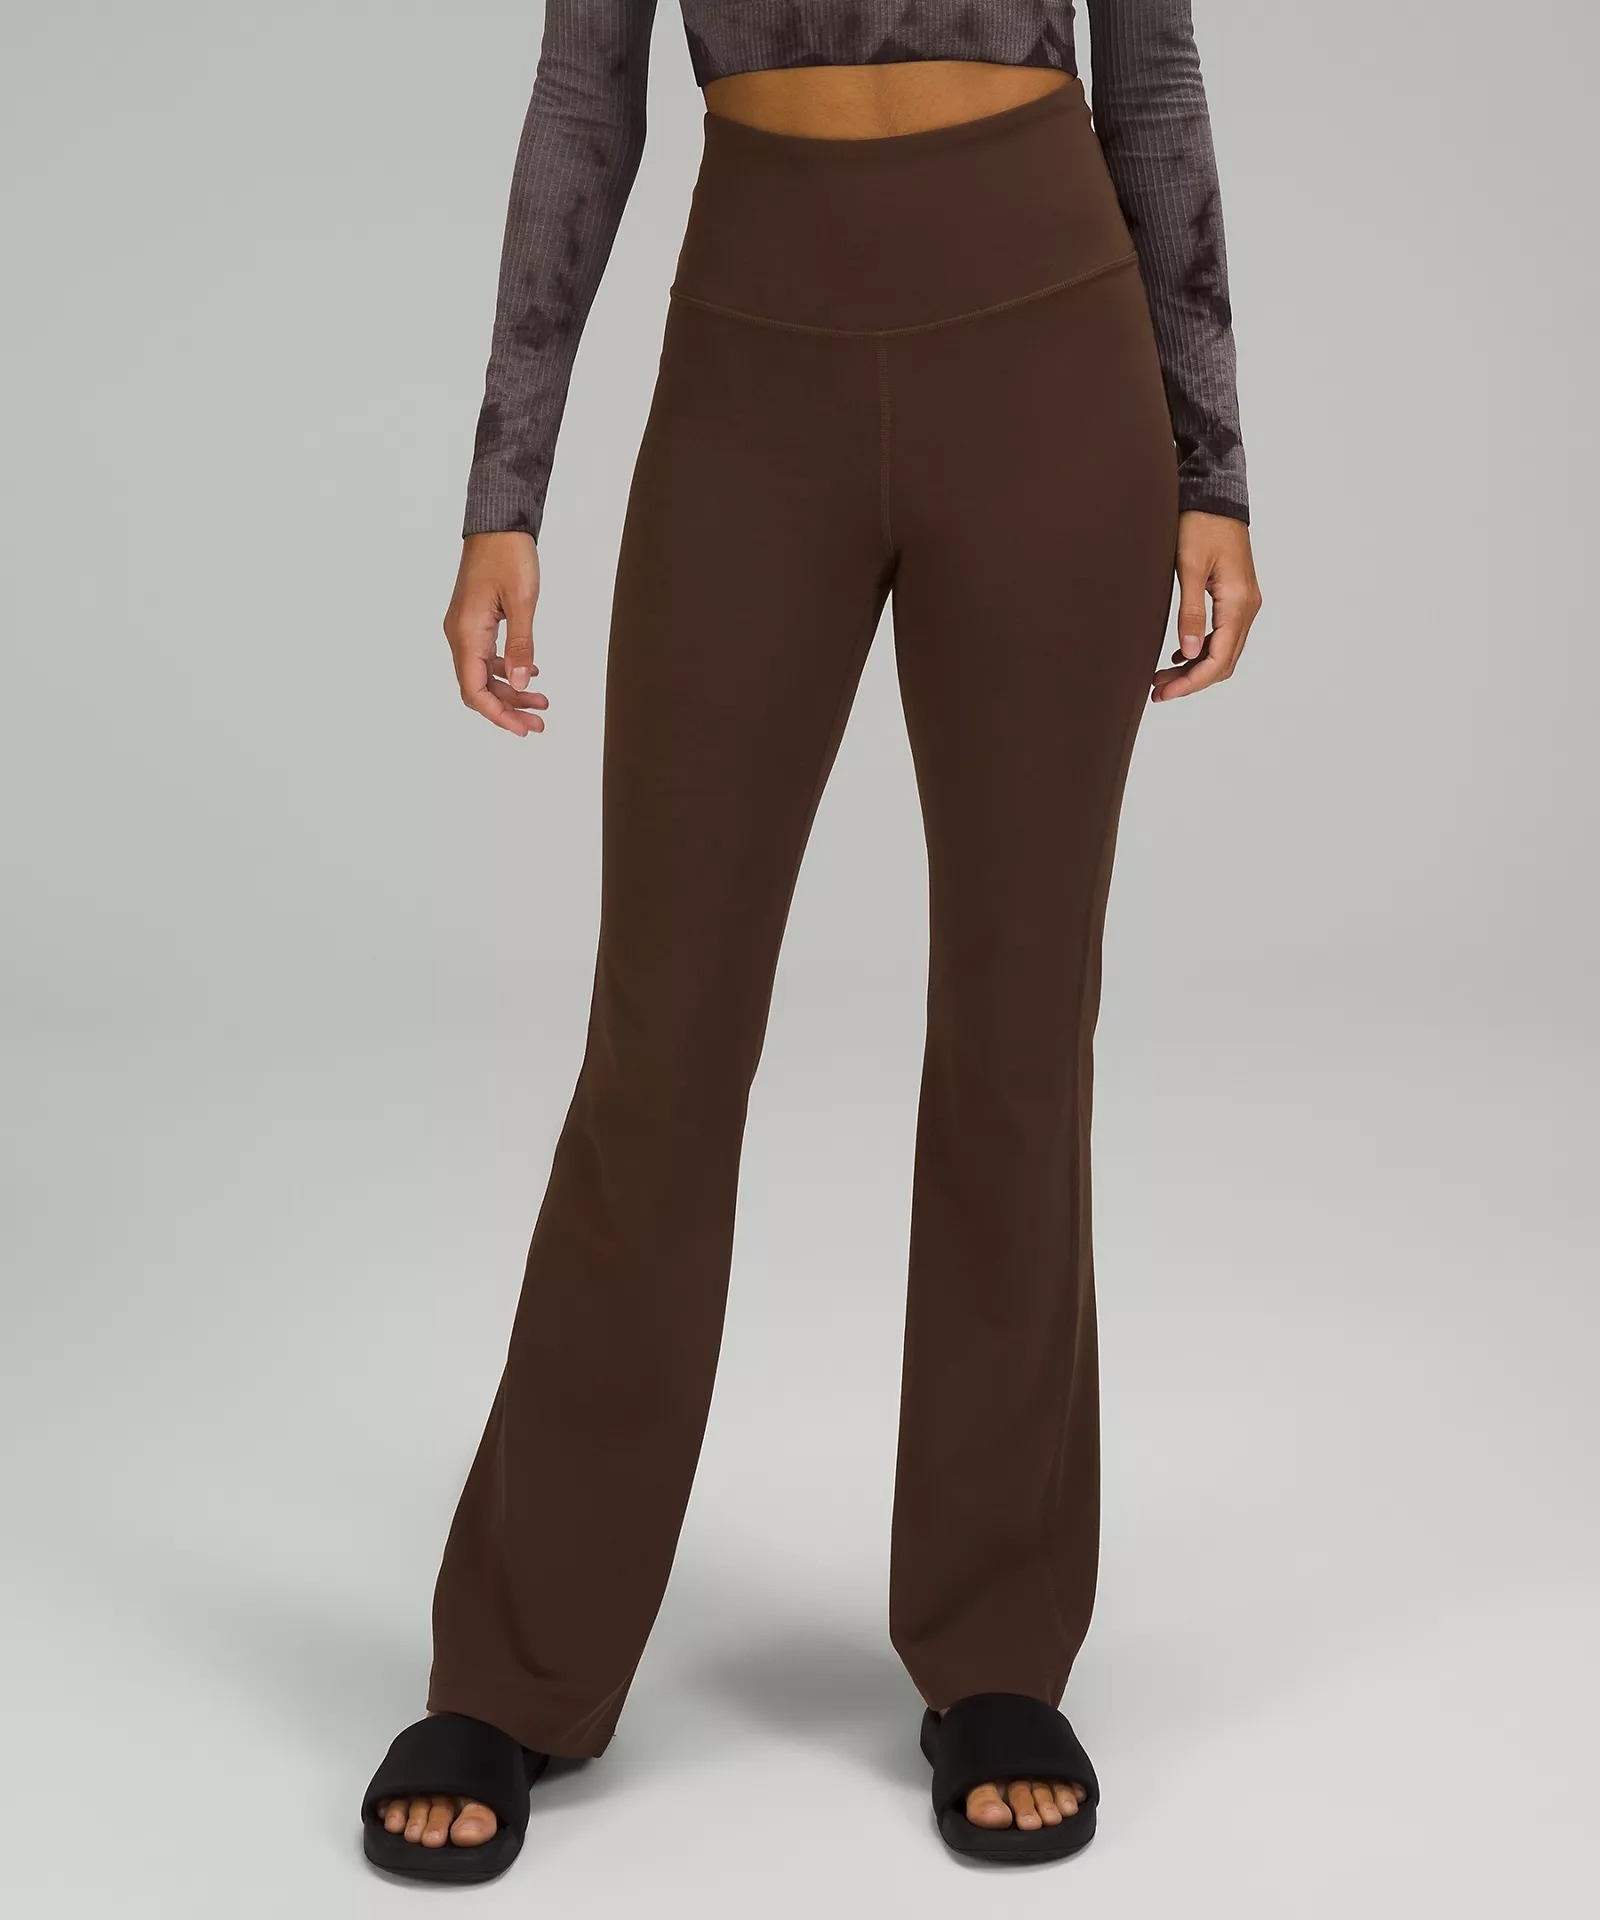 model wearing the brown pants